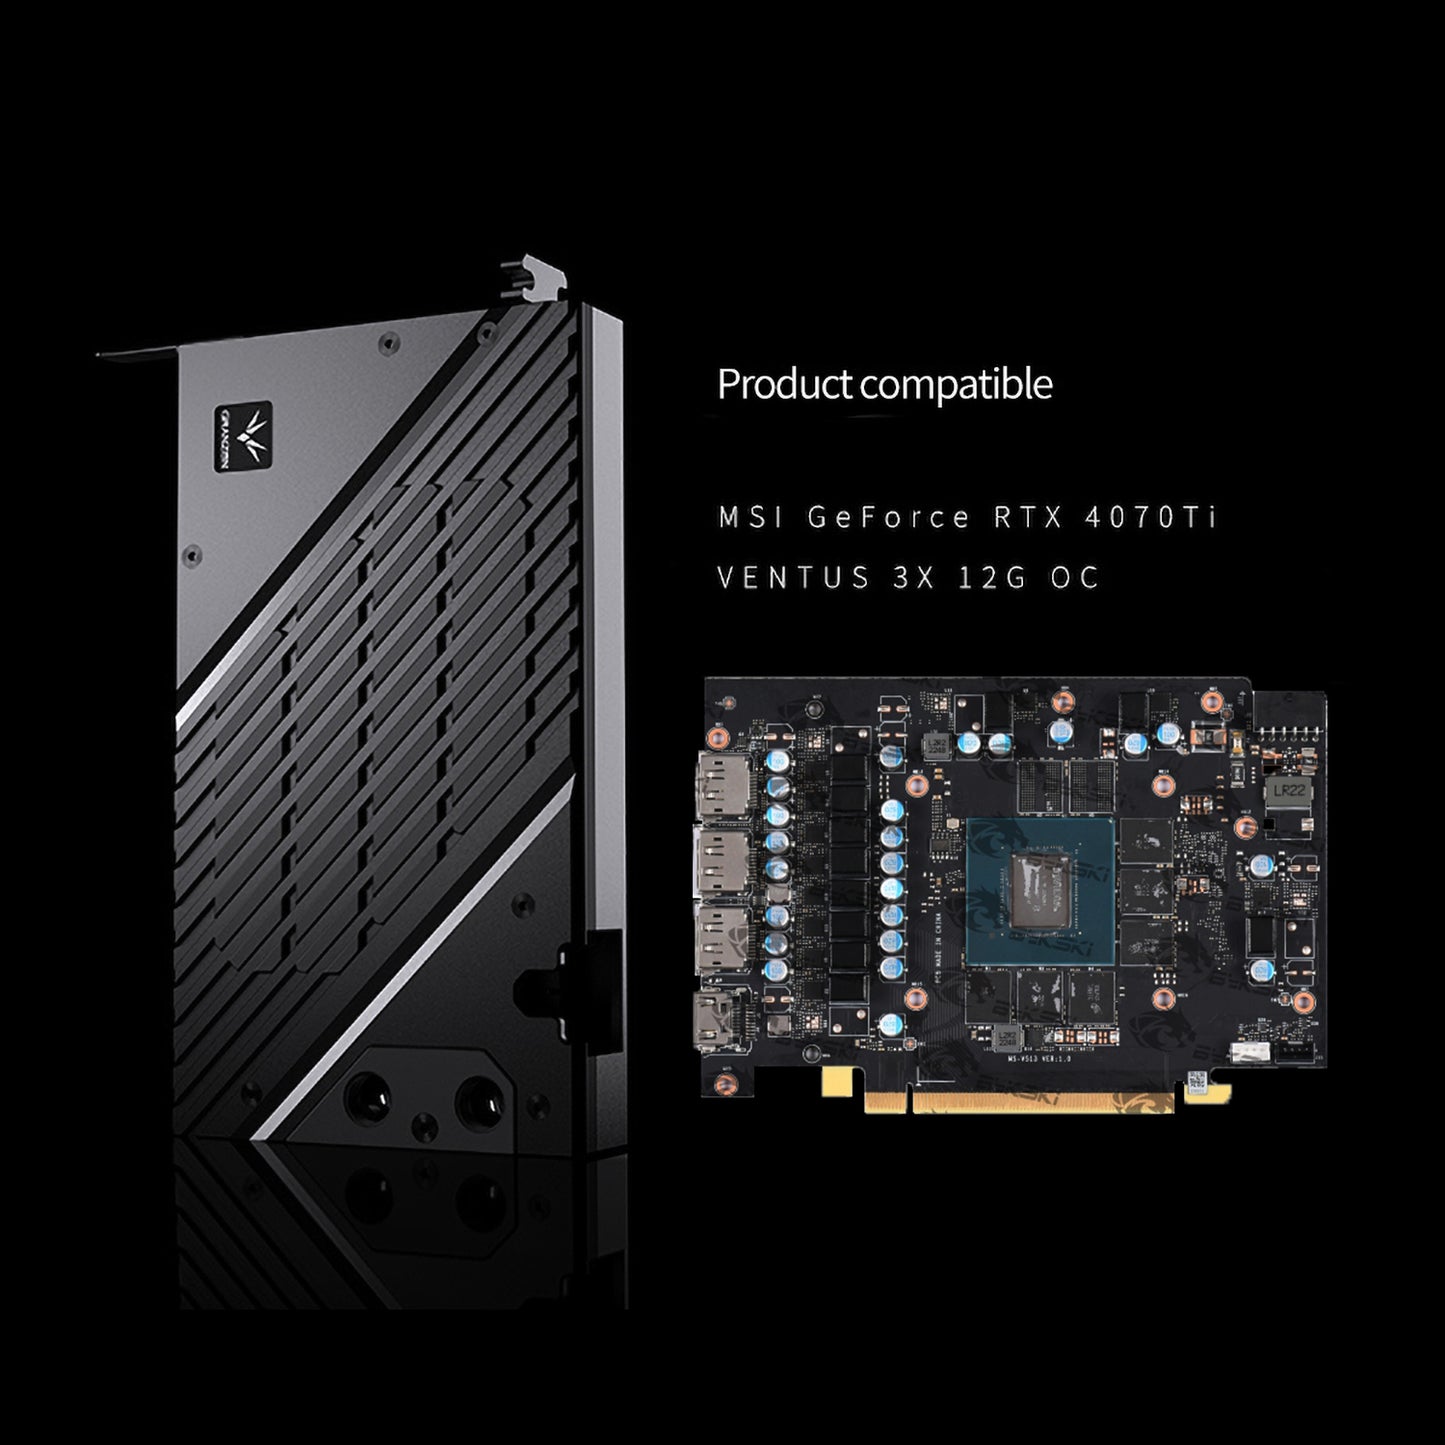 Granzon Full Armor GPU Block For Gigabyte RTX 4090 Windforce / Aorus Xtreme Windforce 24G, Bykski Premium Sub-Brand High Quality Series GPU Water Cooling Cooler, GBN-MS4070TIVES